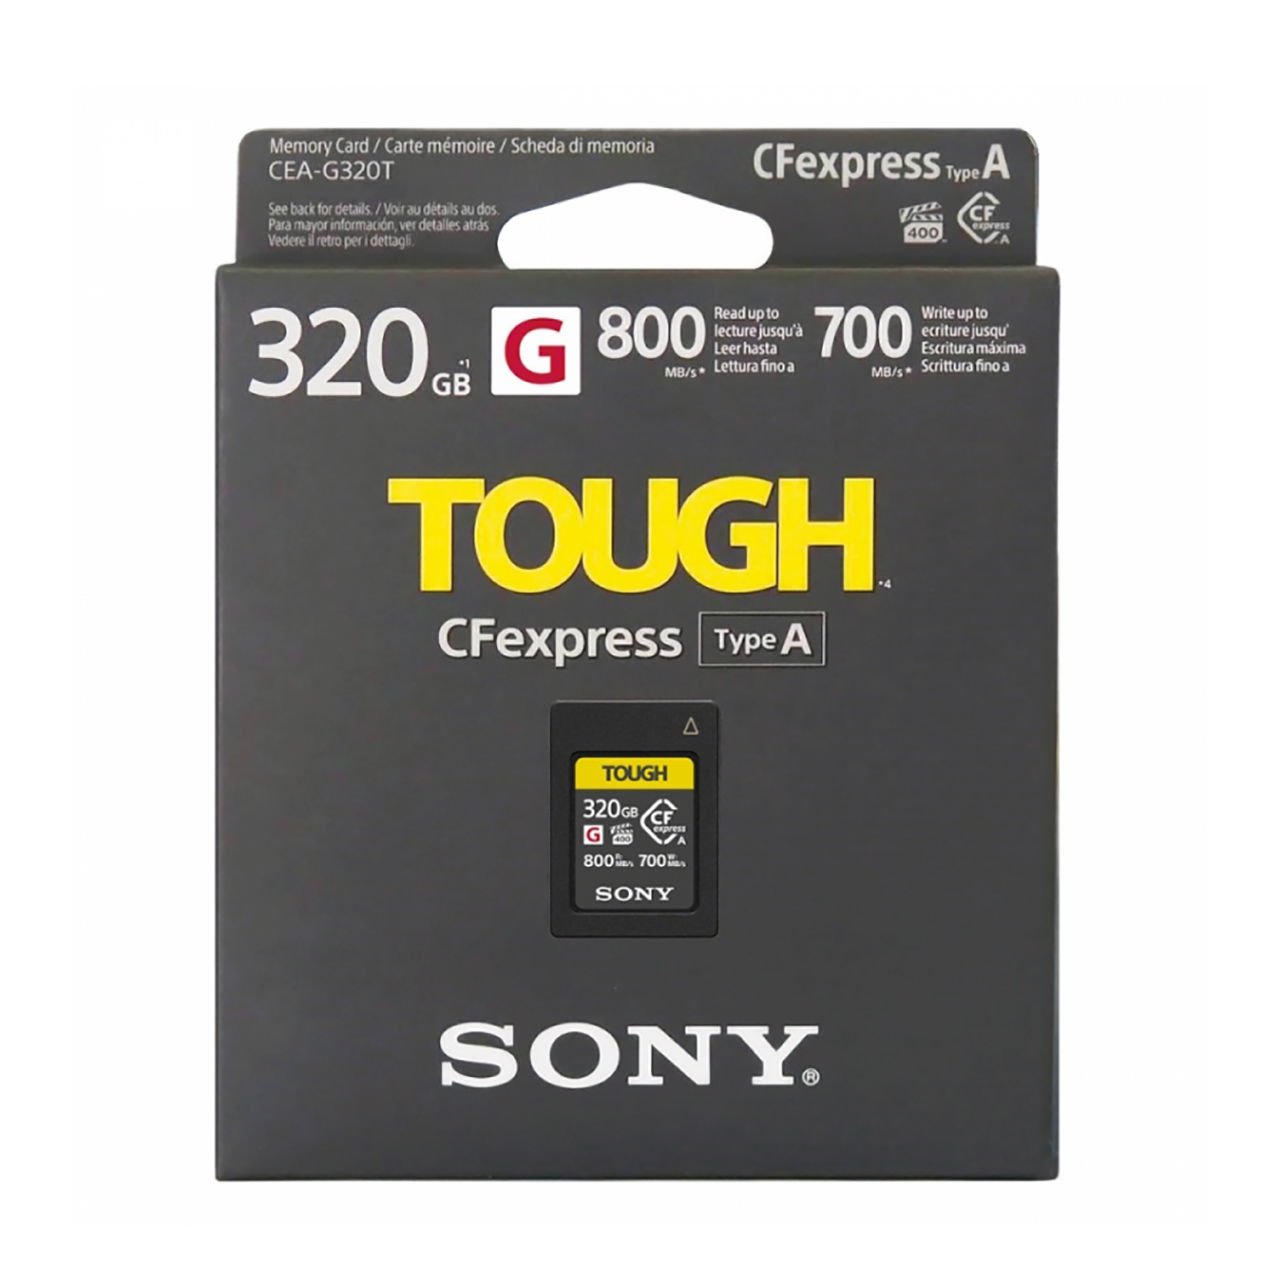 CFexpress Type A CEA-G320T TOUGH 320GB その他